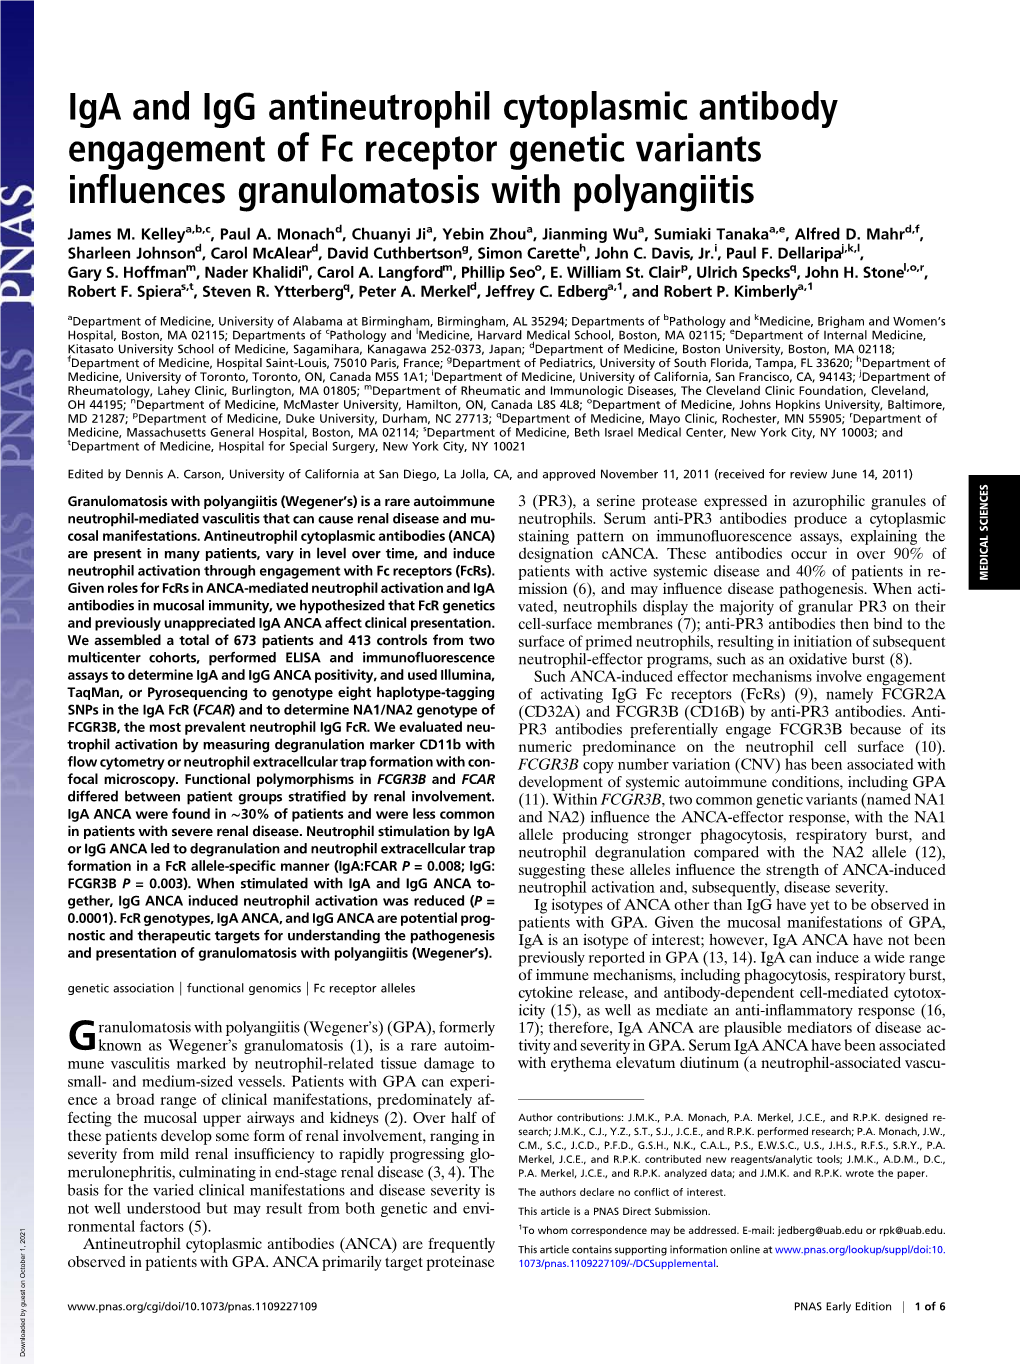 Iga and Igg Antineutrophil Cytoplasmic Antibody Engagement of Fc Receptor Genetic Variants Influences Granulomatosis with Polyan